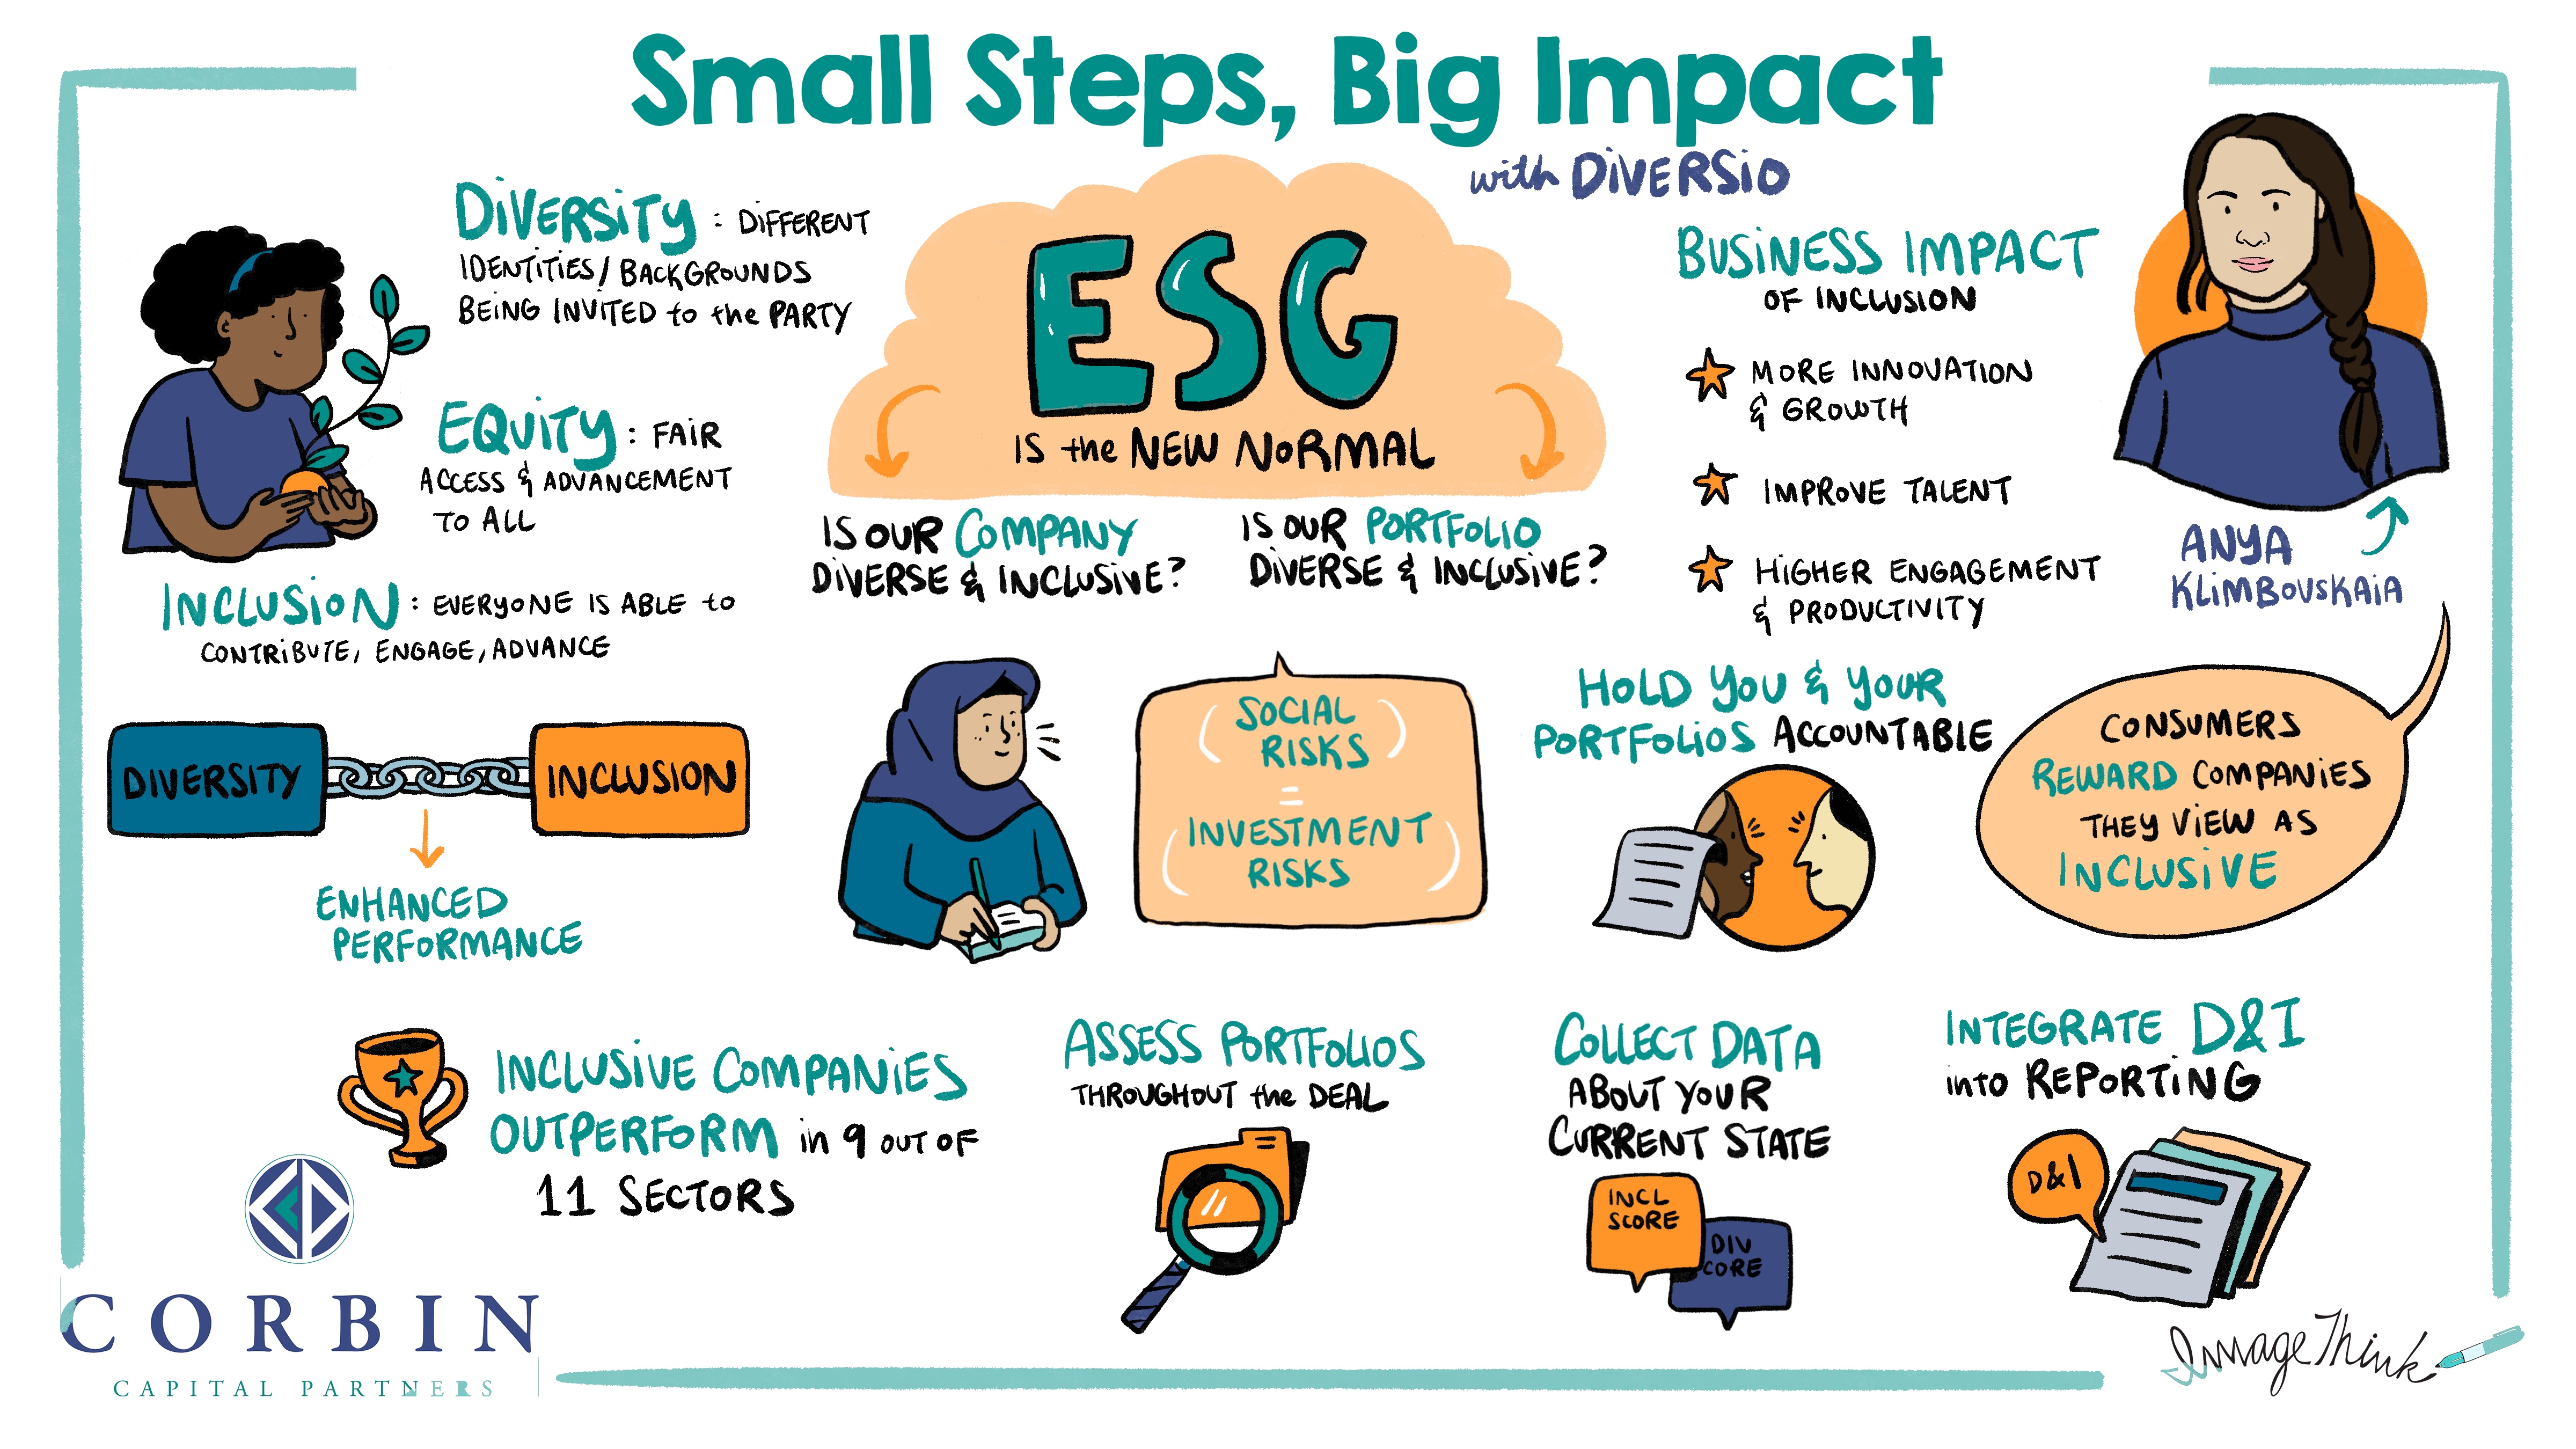 Small Steps Big Impact